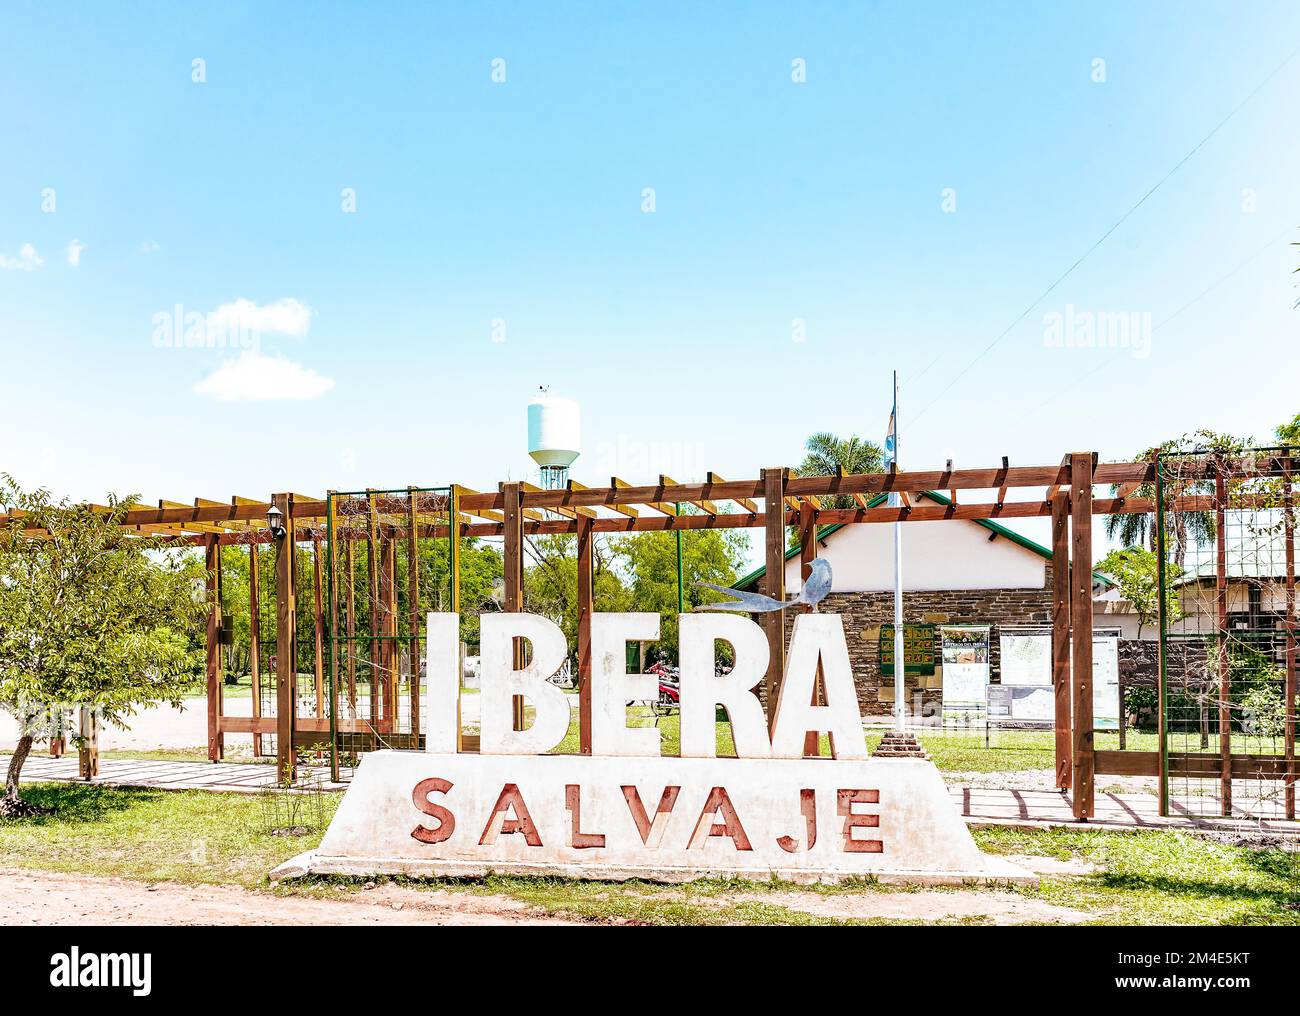 COLONIA CARLOS PELLEGRINI, CORRIENTES, ARGENTINA - NOVEMBER 19, 2021: Big sign with the copy 'Ibera Salvaje' (Wild Ibera) belong to the center of inte Stock Photo